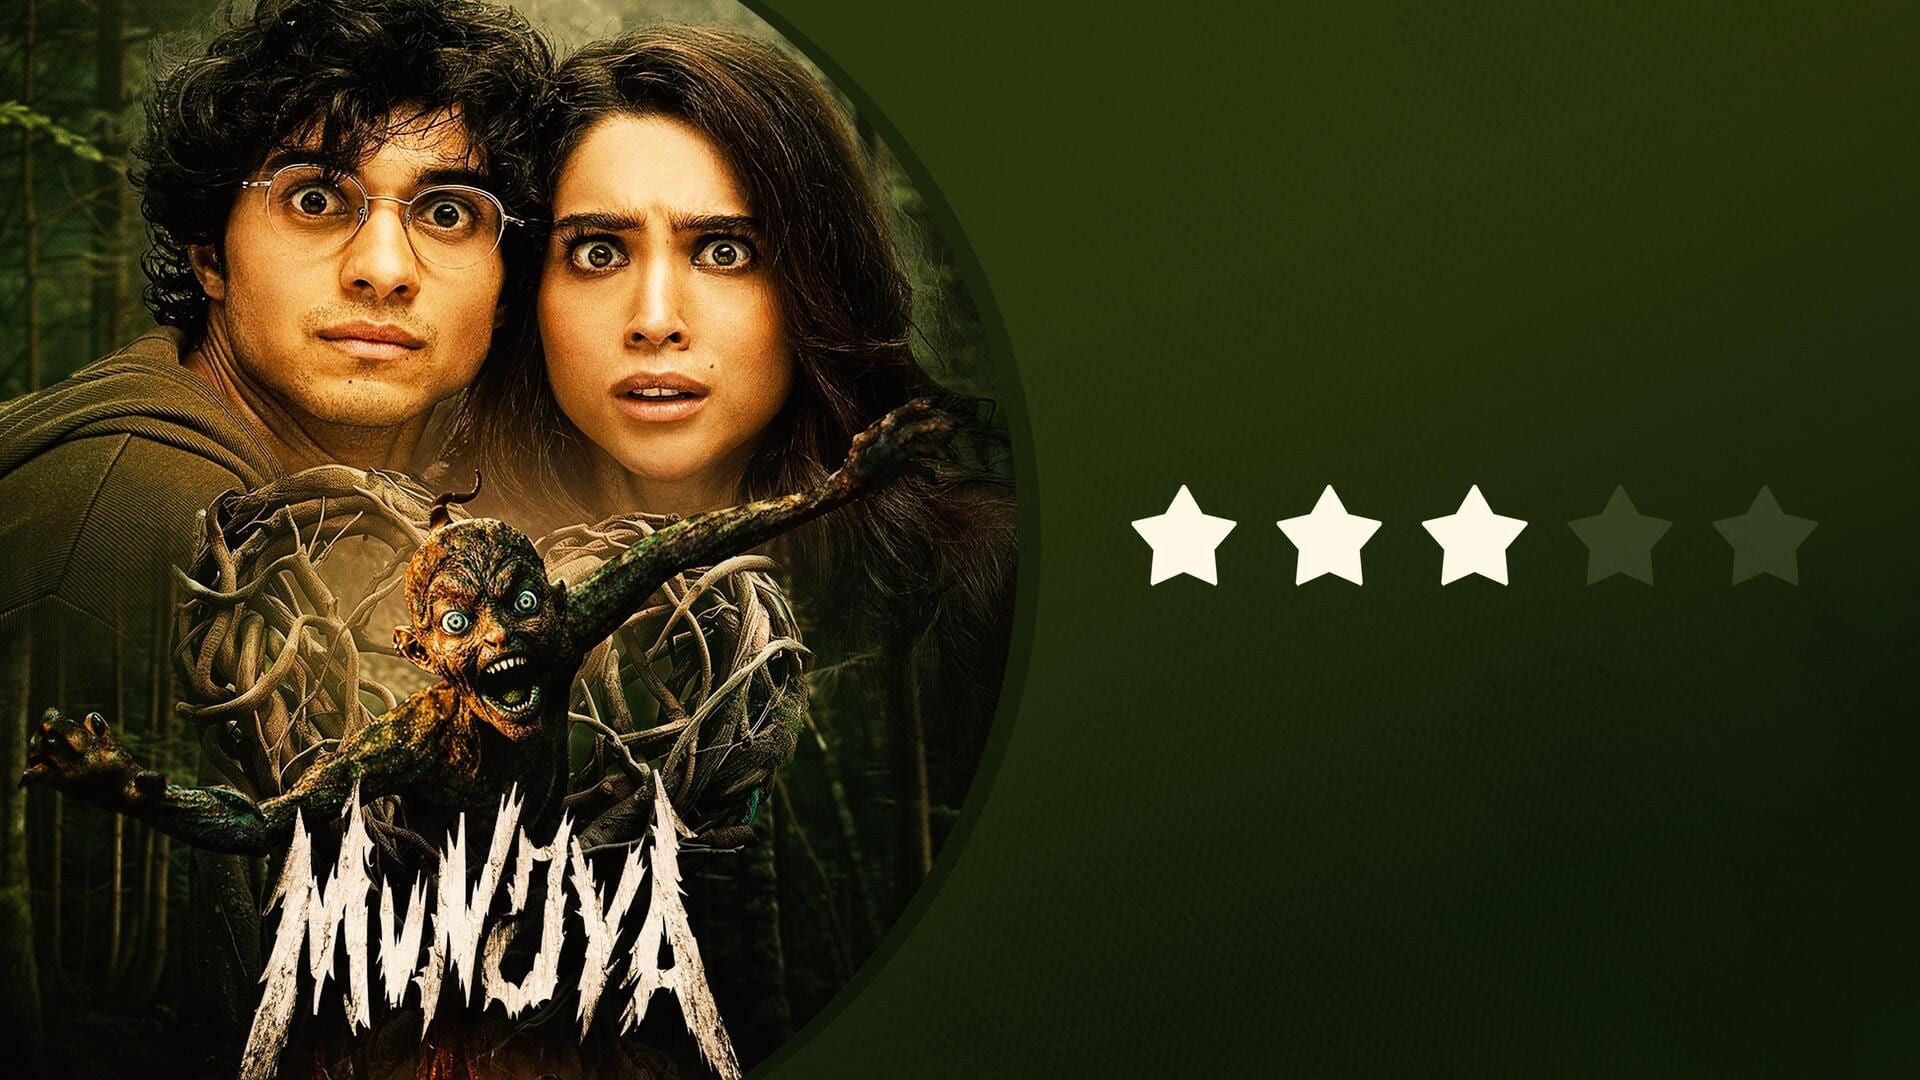 'Munjya' review: Entertaining exploration of spooky Maharashtrian folk tale